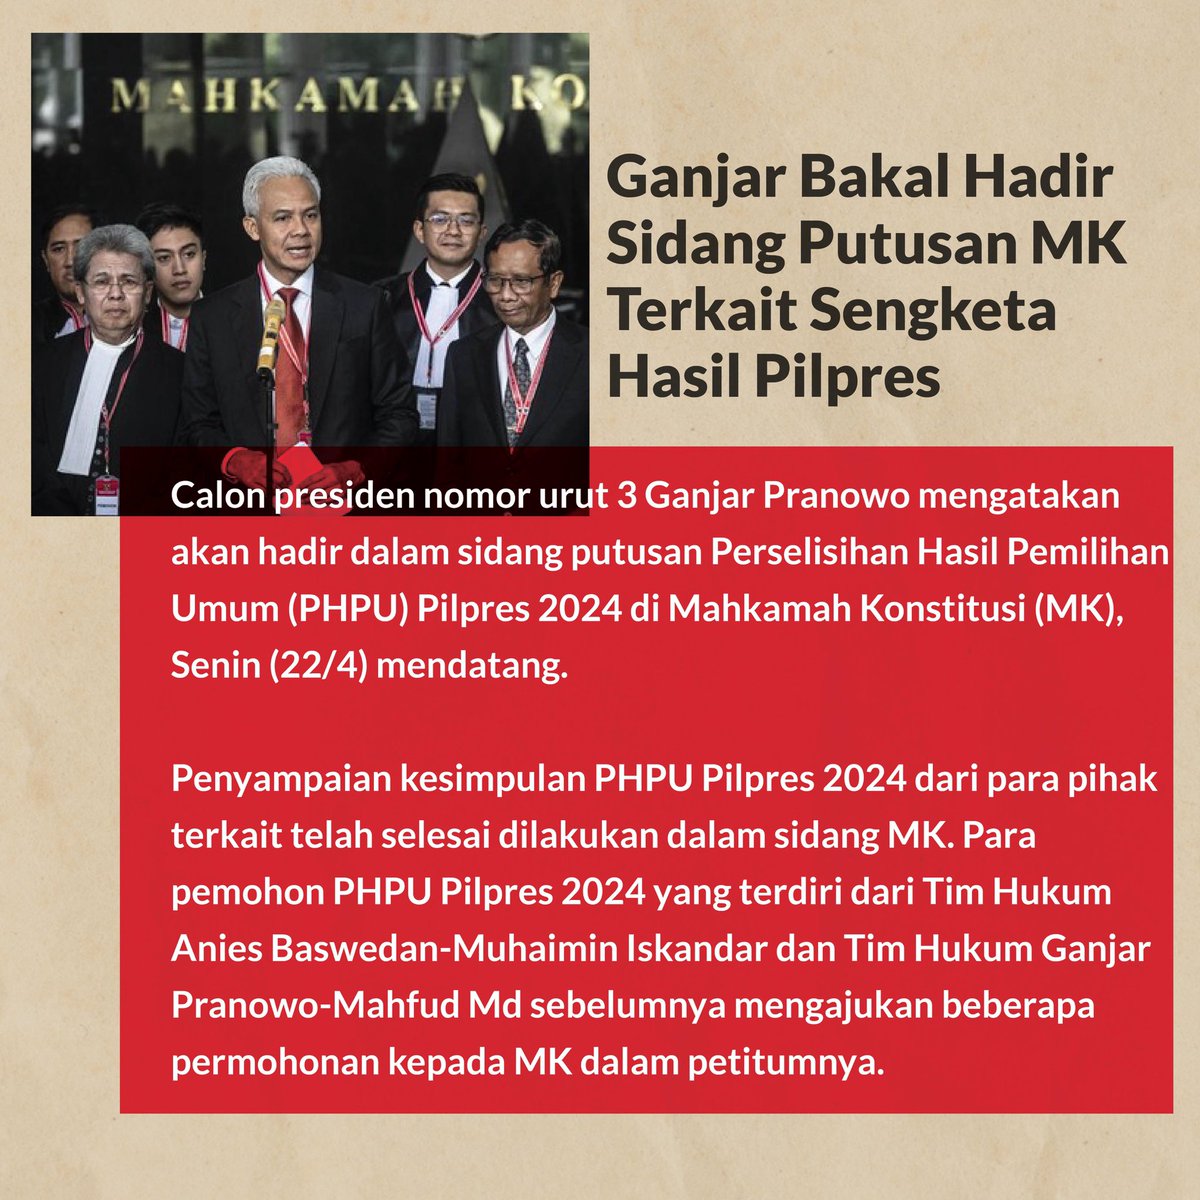 Hasil sidang sengketa yang digelar di Mahkamah Konstitusi Republik Indonesia akan dilaksanakan pada tanggal 22 April 2024. Dipastikan Ganjar Pranowo menghadiri pembacaan keputusan pada hari tersebut. 

#ganjarmahfud #ganjarmahfudflashnews #KabarGAMA #mahkamahkonstitusi